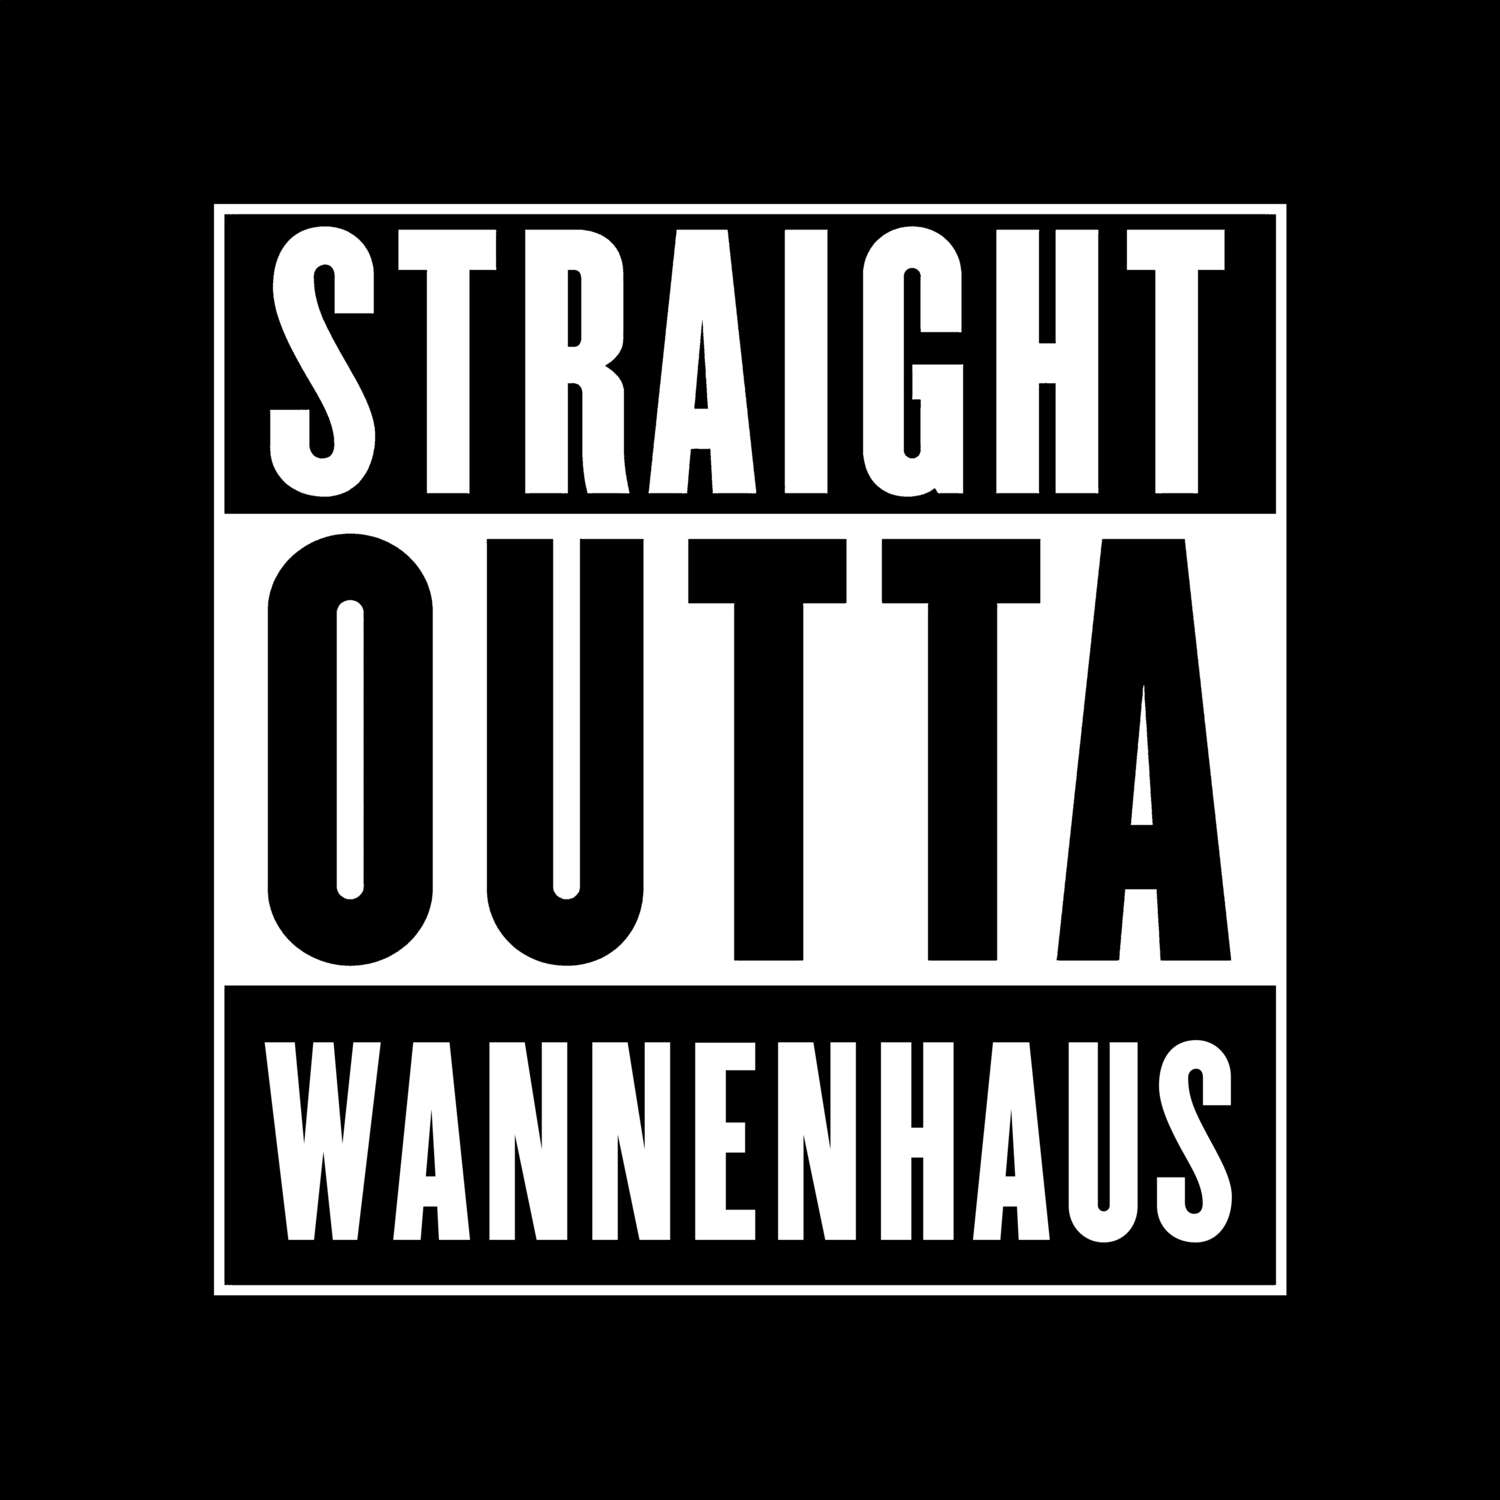 Wannenhaus T-Shirt »Straight Outta«